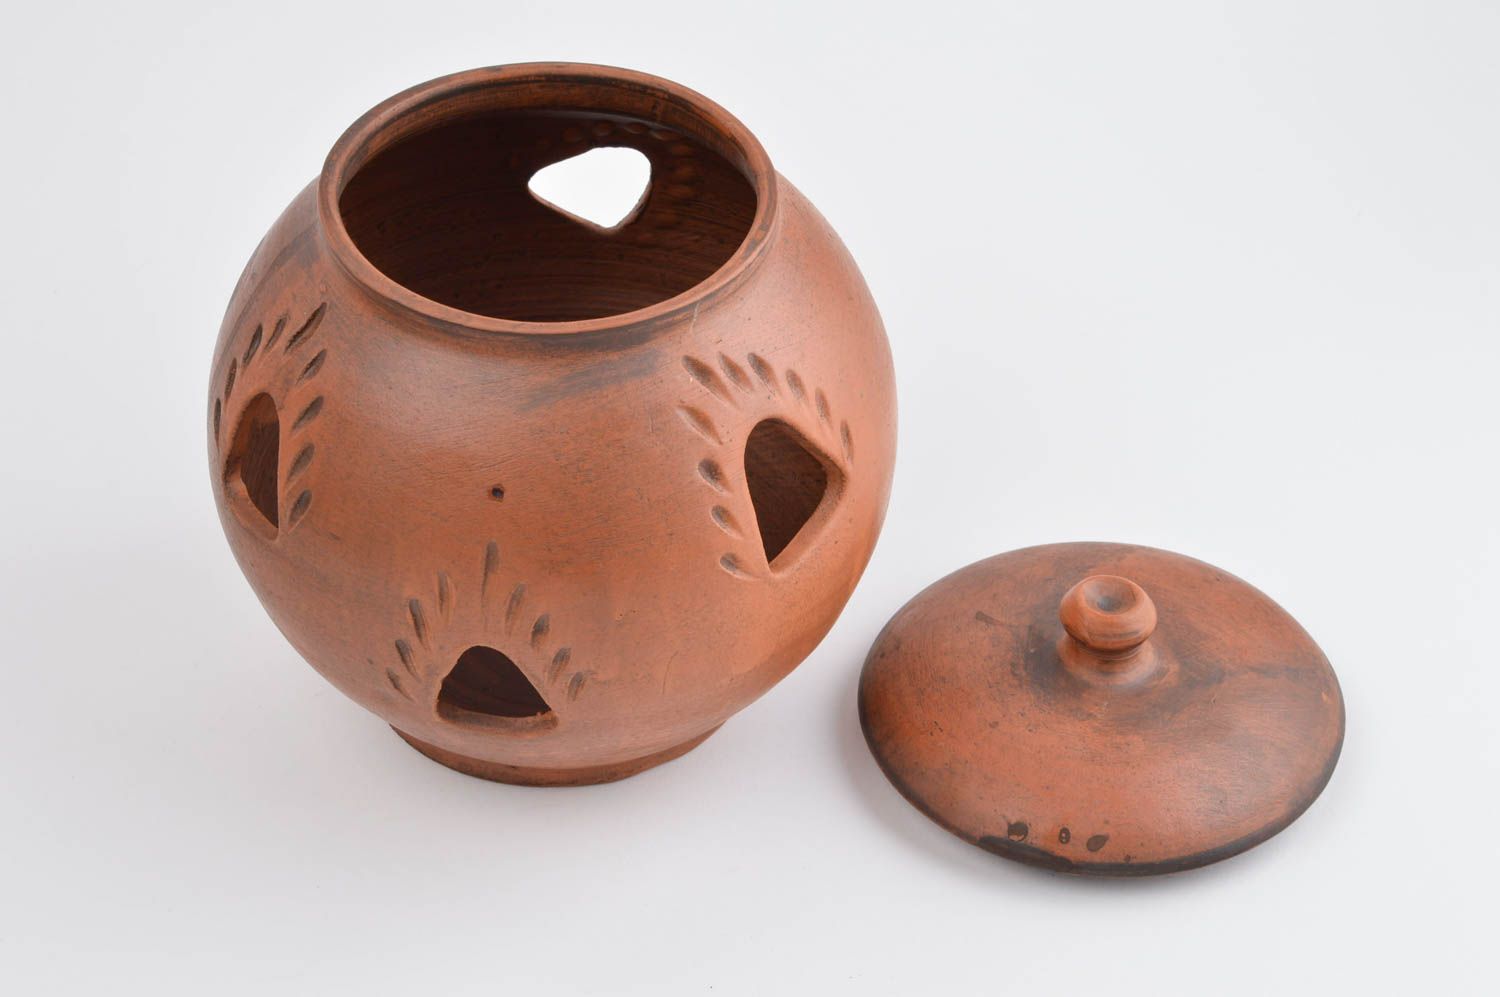 Unusual handmade ceramic pot home goods tableware ideas kitchen supplies photo 3